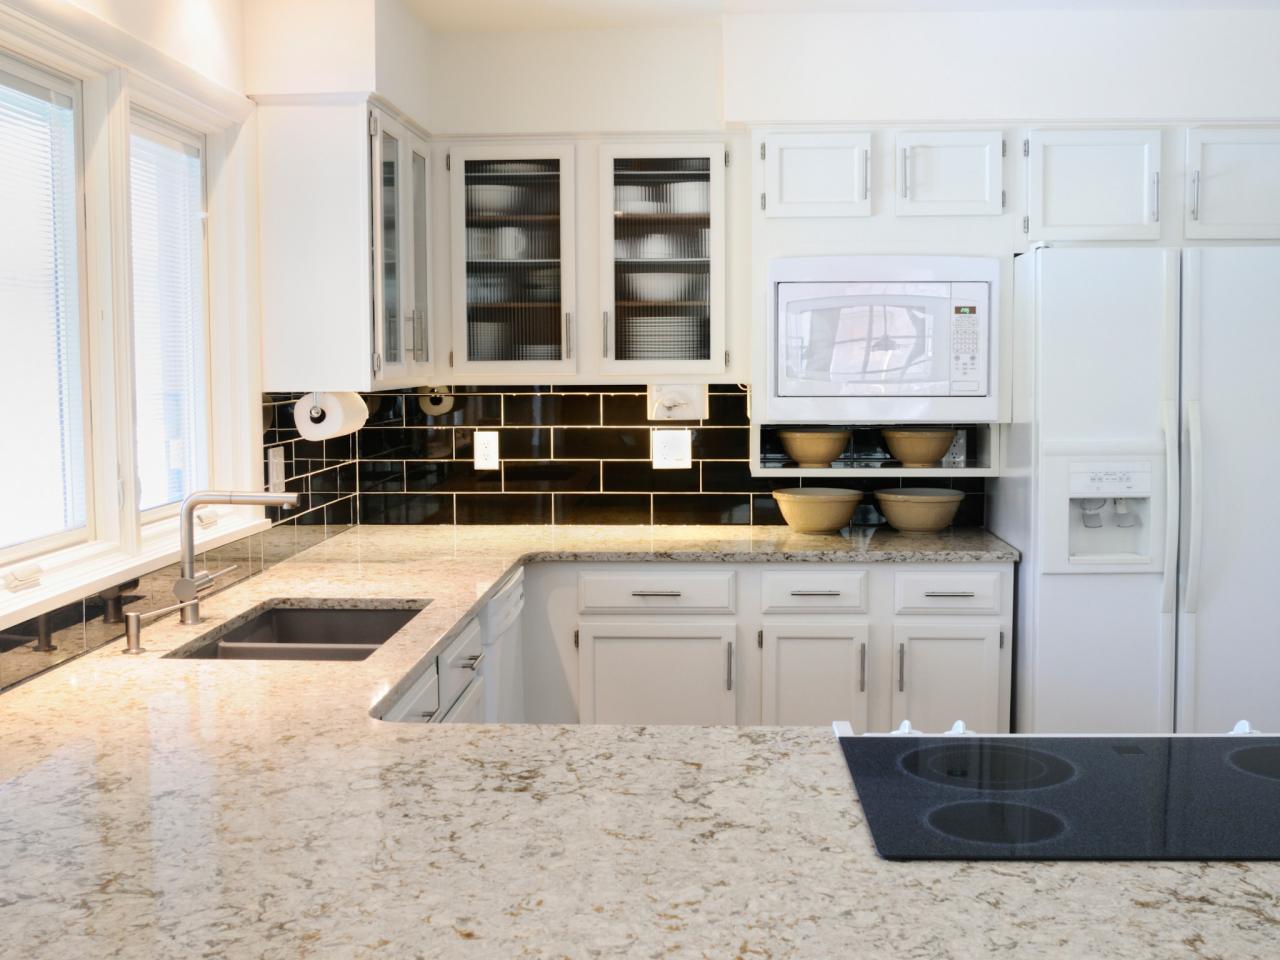 White Granite Kitchen Countertops Pictures & Ideas From HGTV HGTV